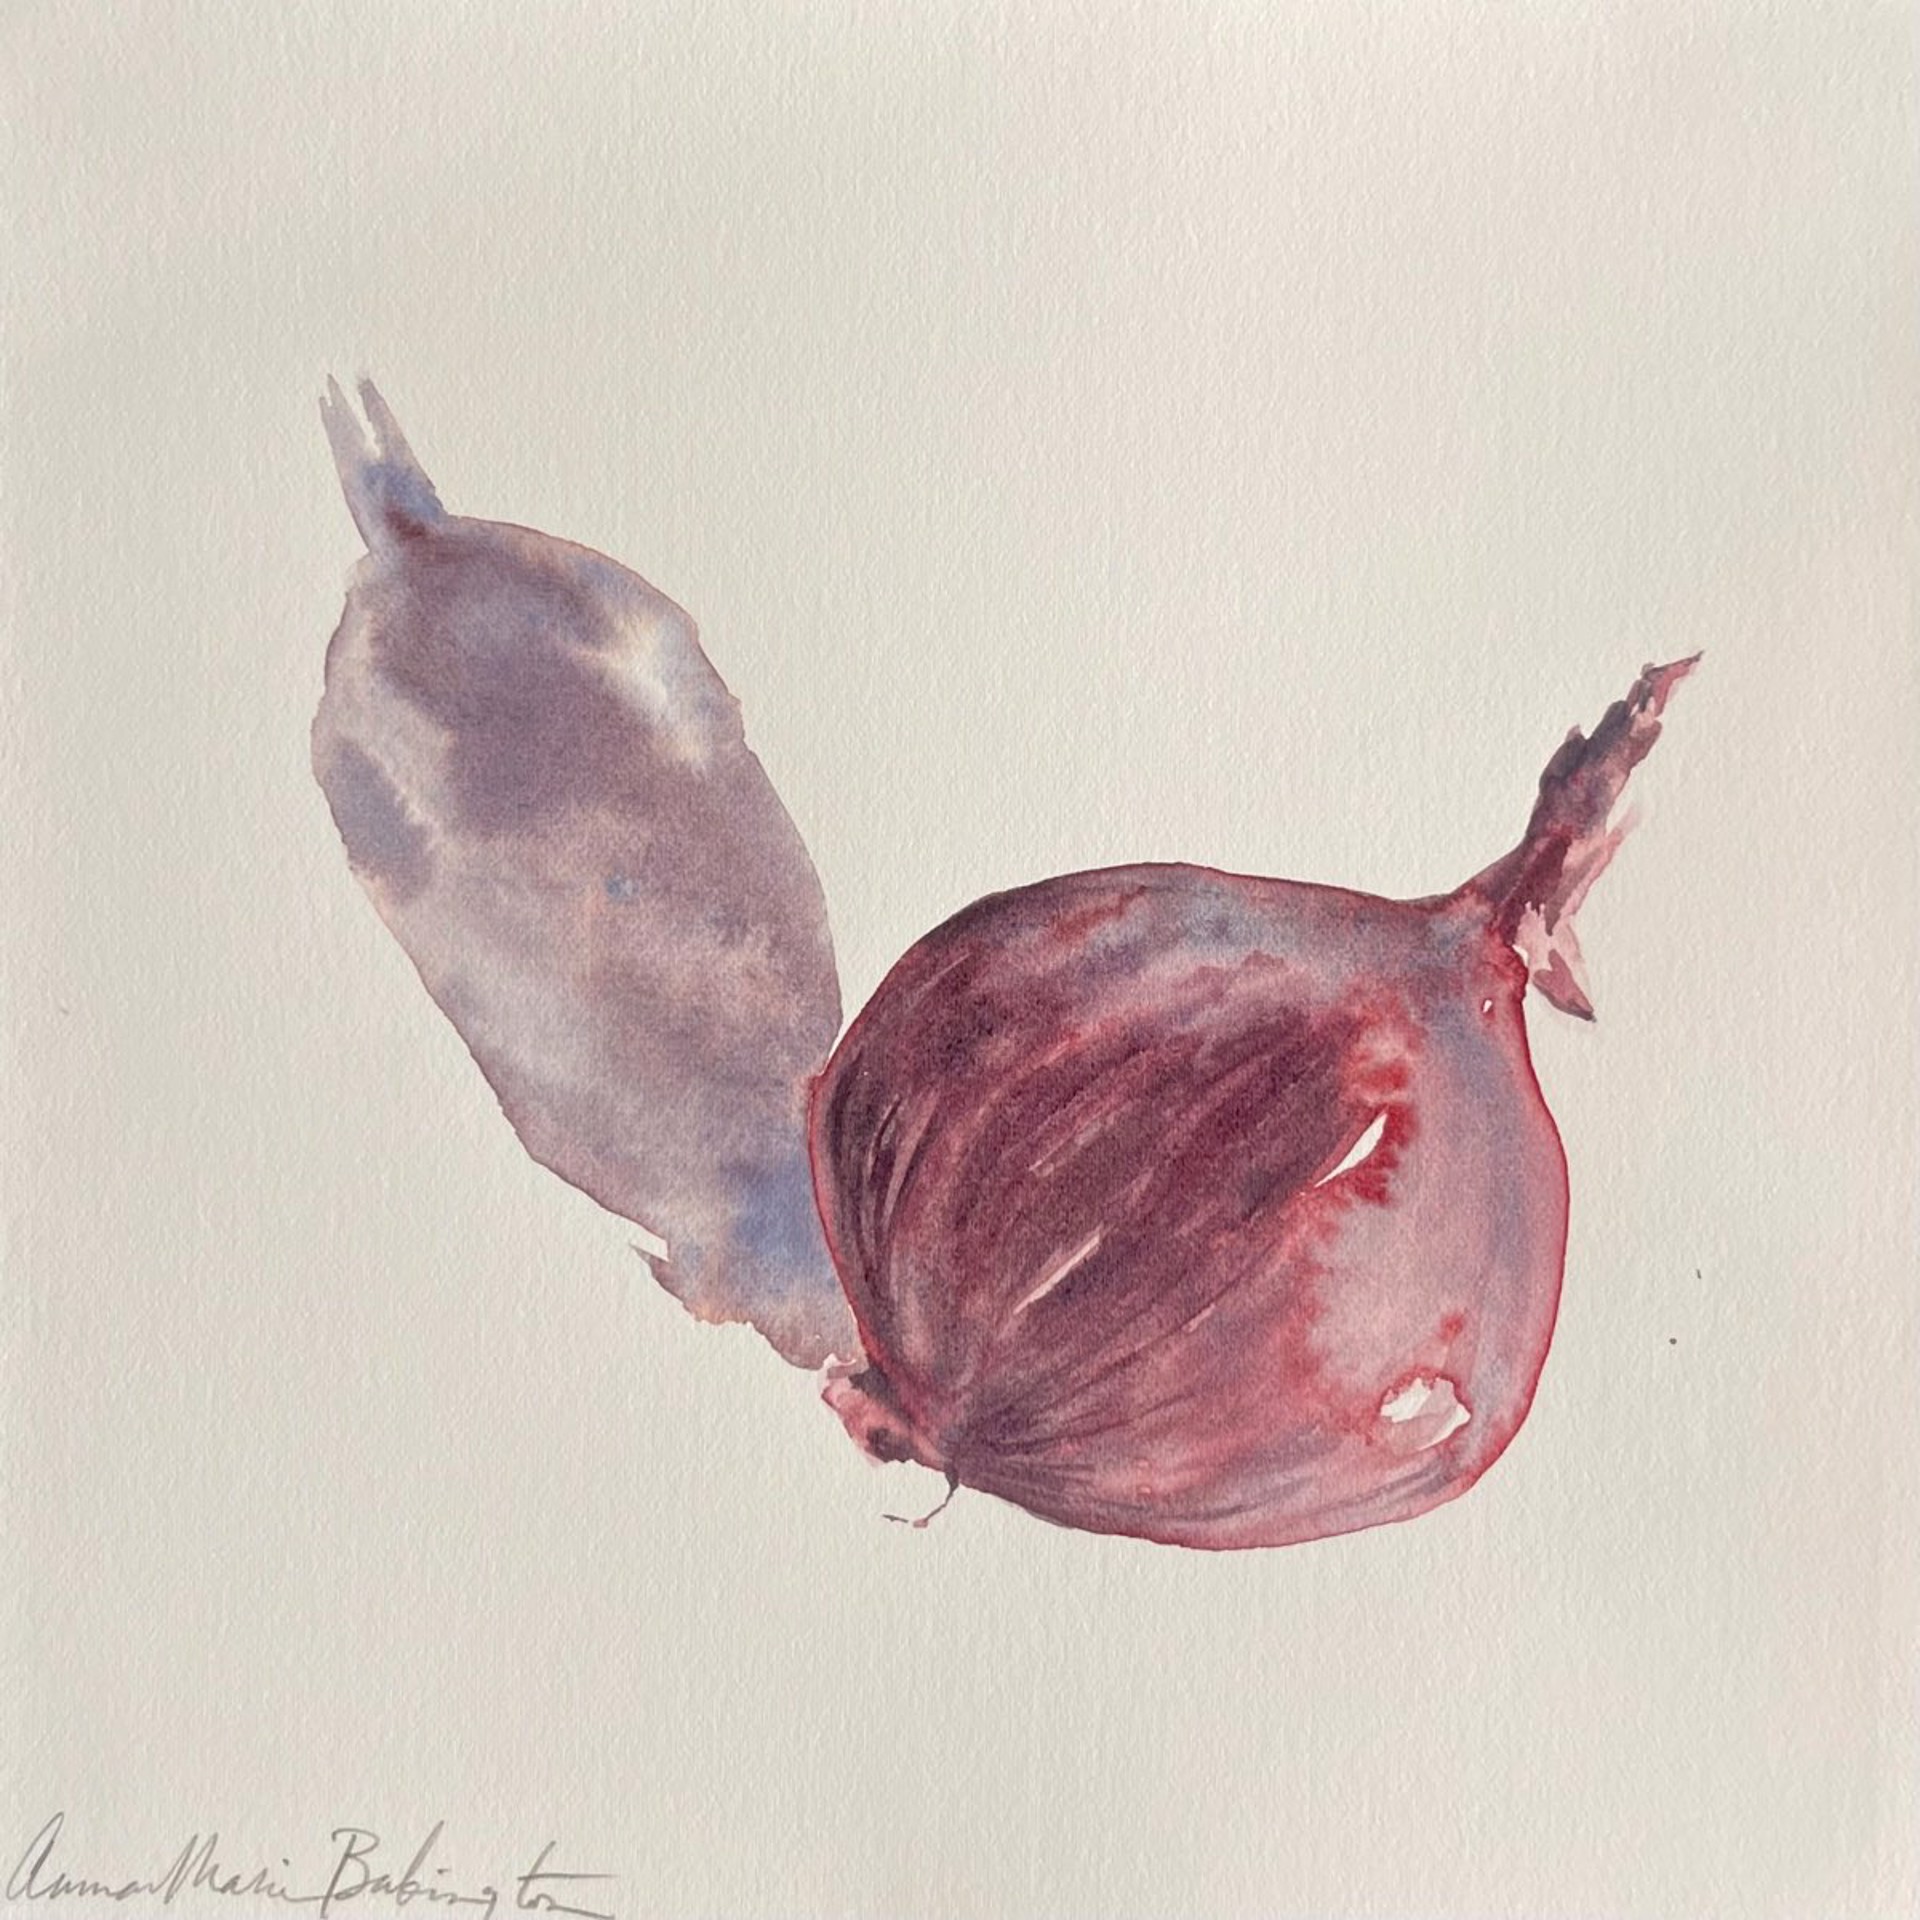 Red Onion by Anna-Marie Babington